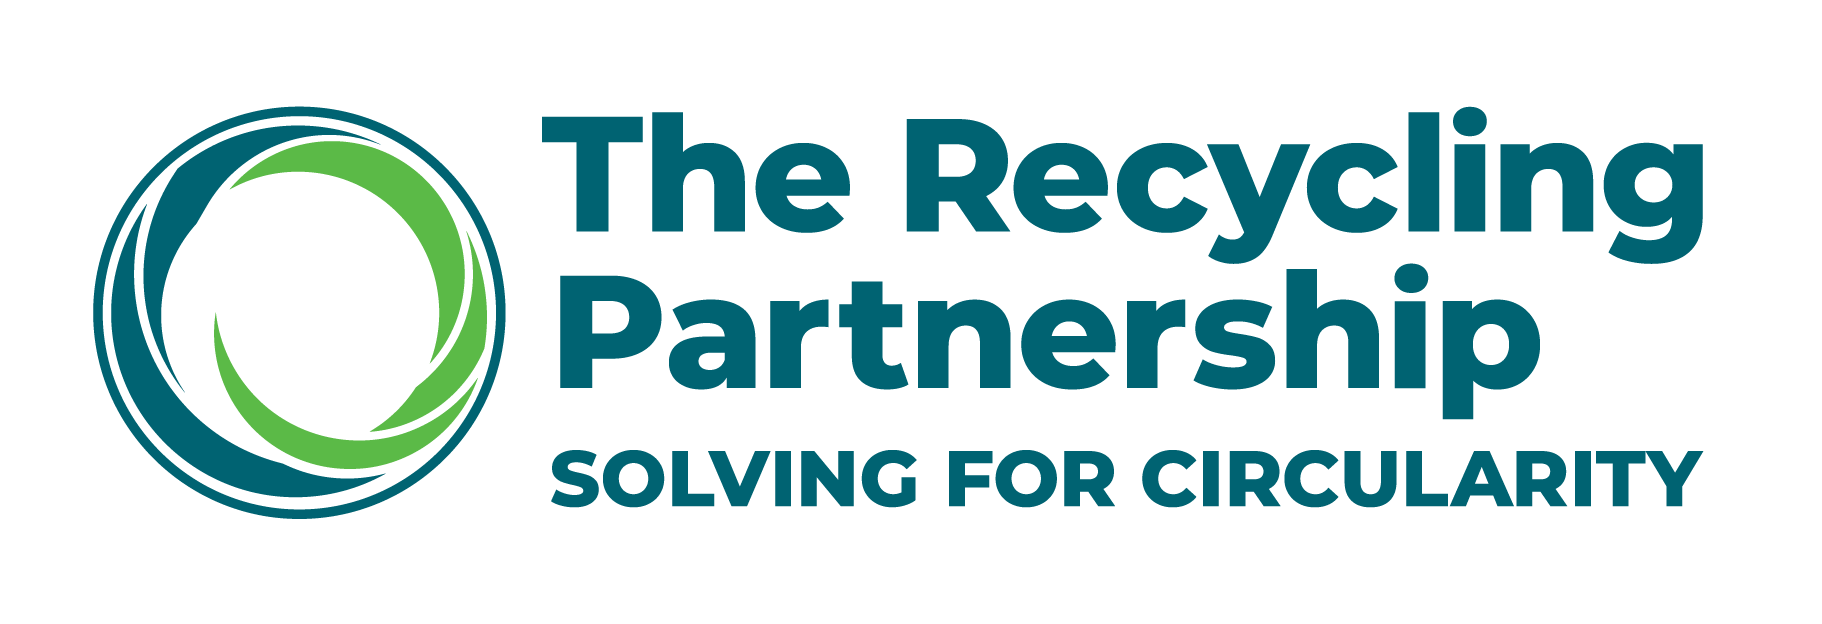 recycling-partnership-logo-color-1